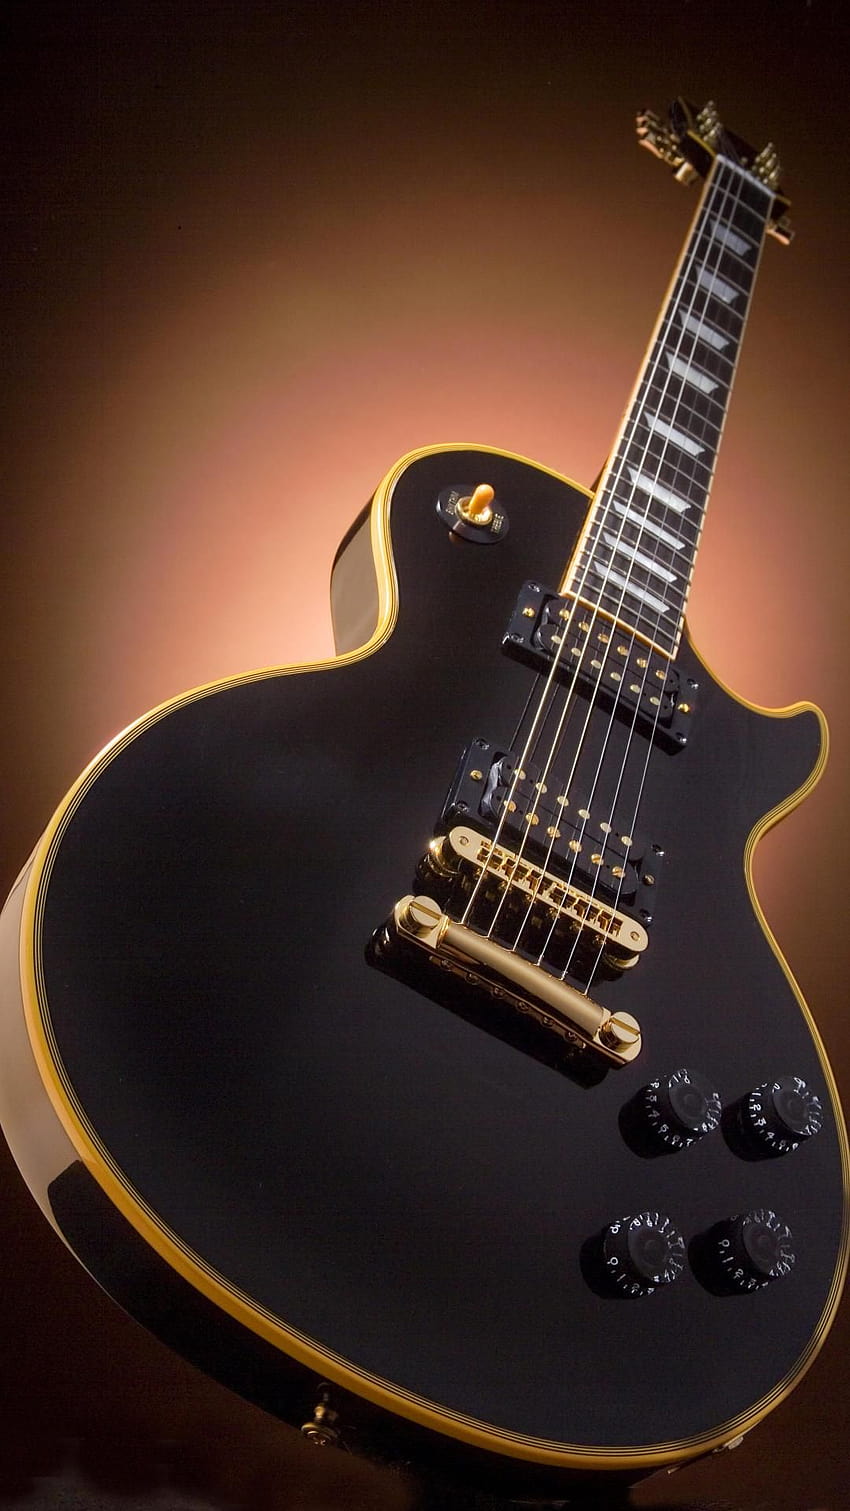 ScreenHeaven Gibson Les Paul guitarras y teléfono de guitarra lleno fondo de pantalla del teléfono